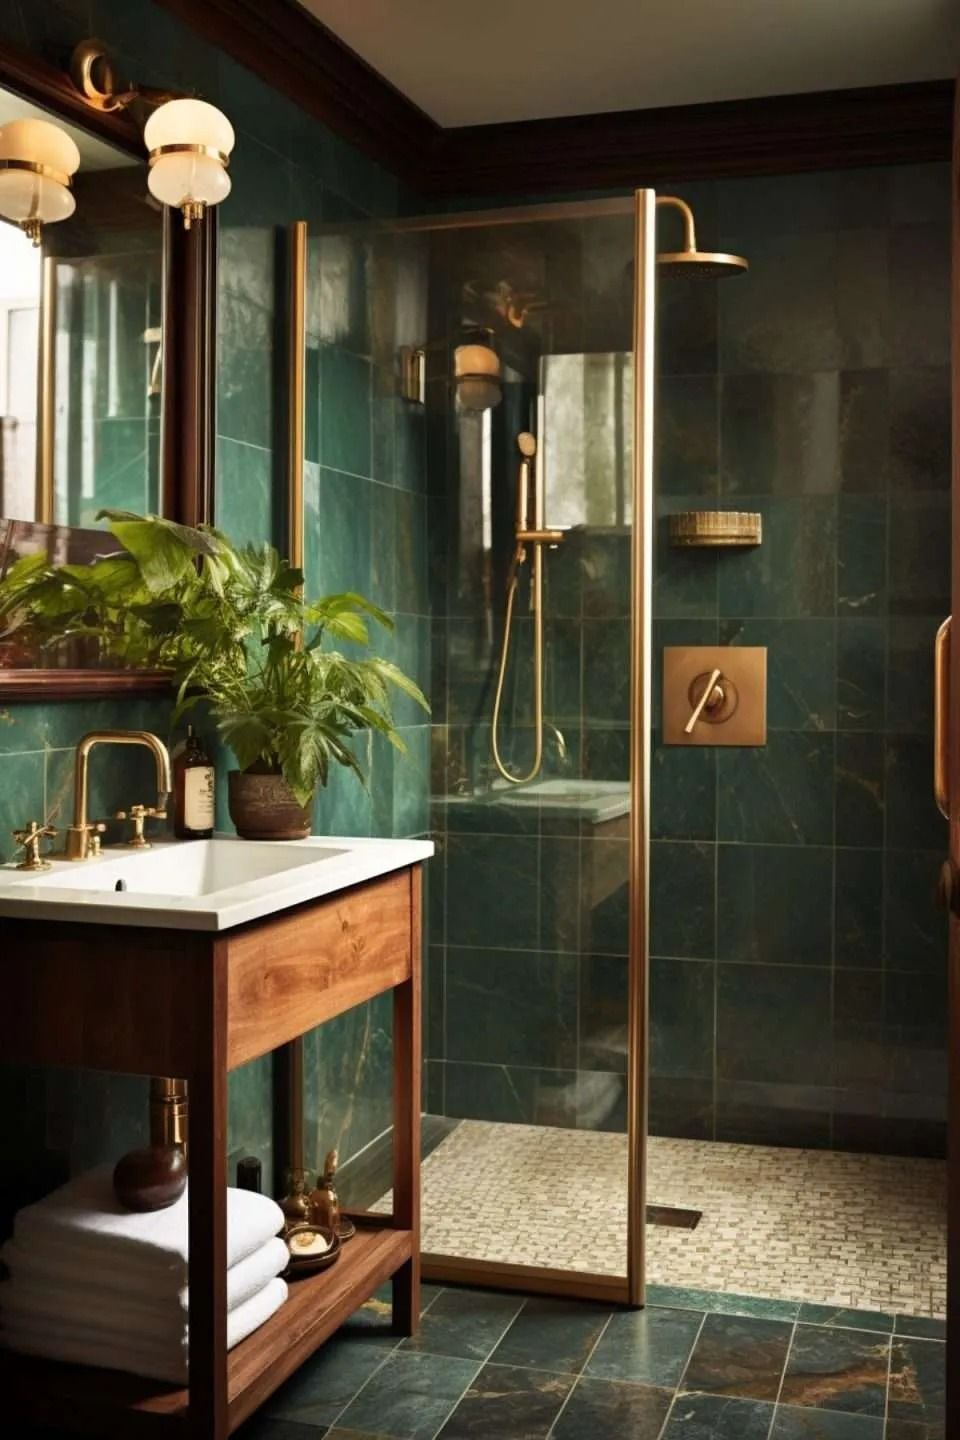 Enhancing Your Bathroom with Stylish Decor